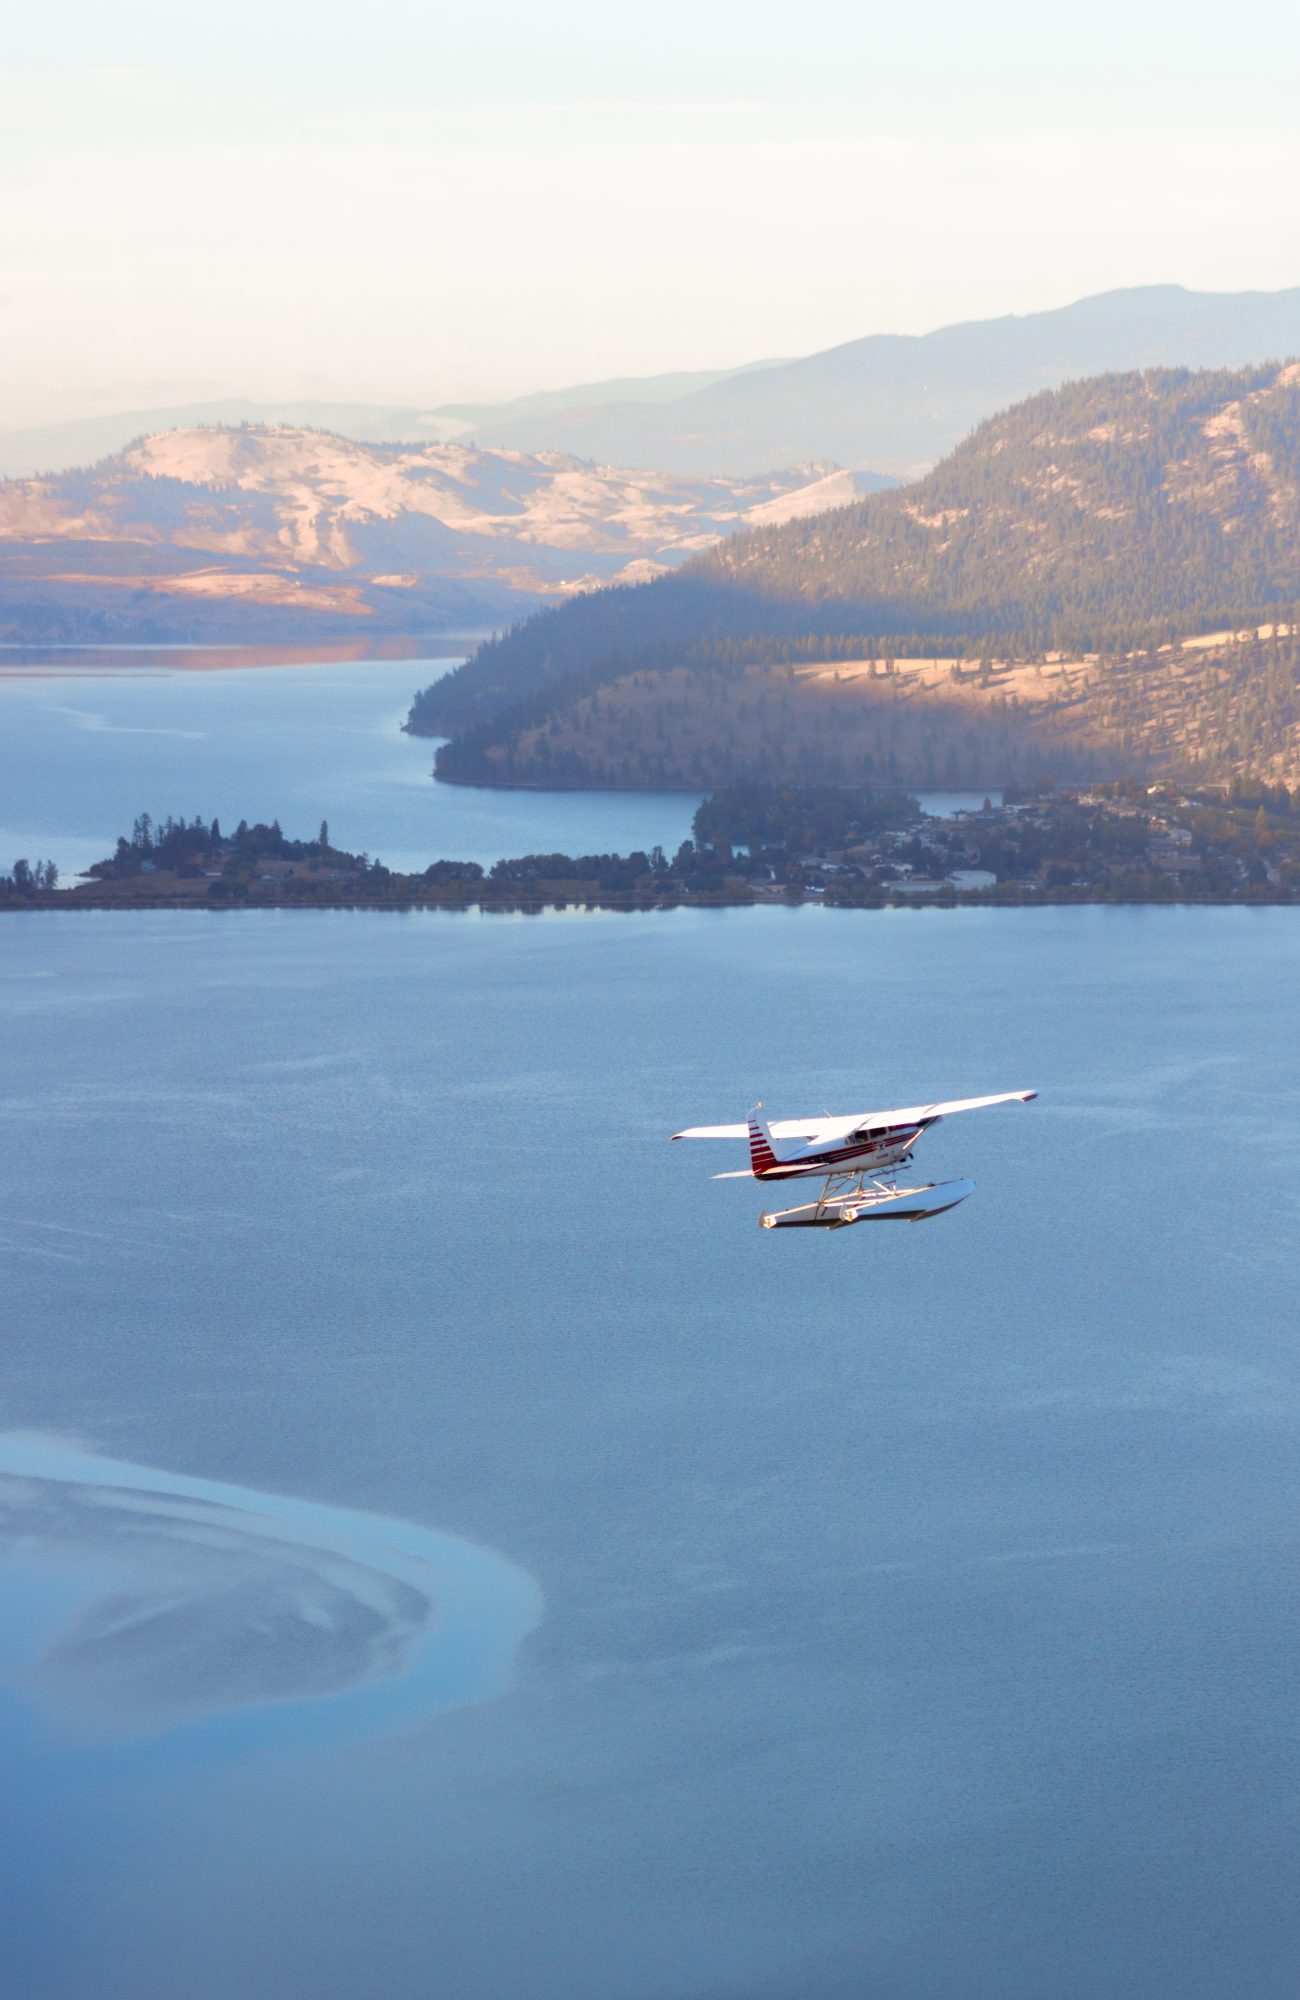 floatplane in the distance over Kalamalka Lake in British Columbia